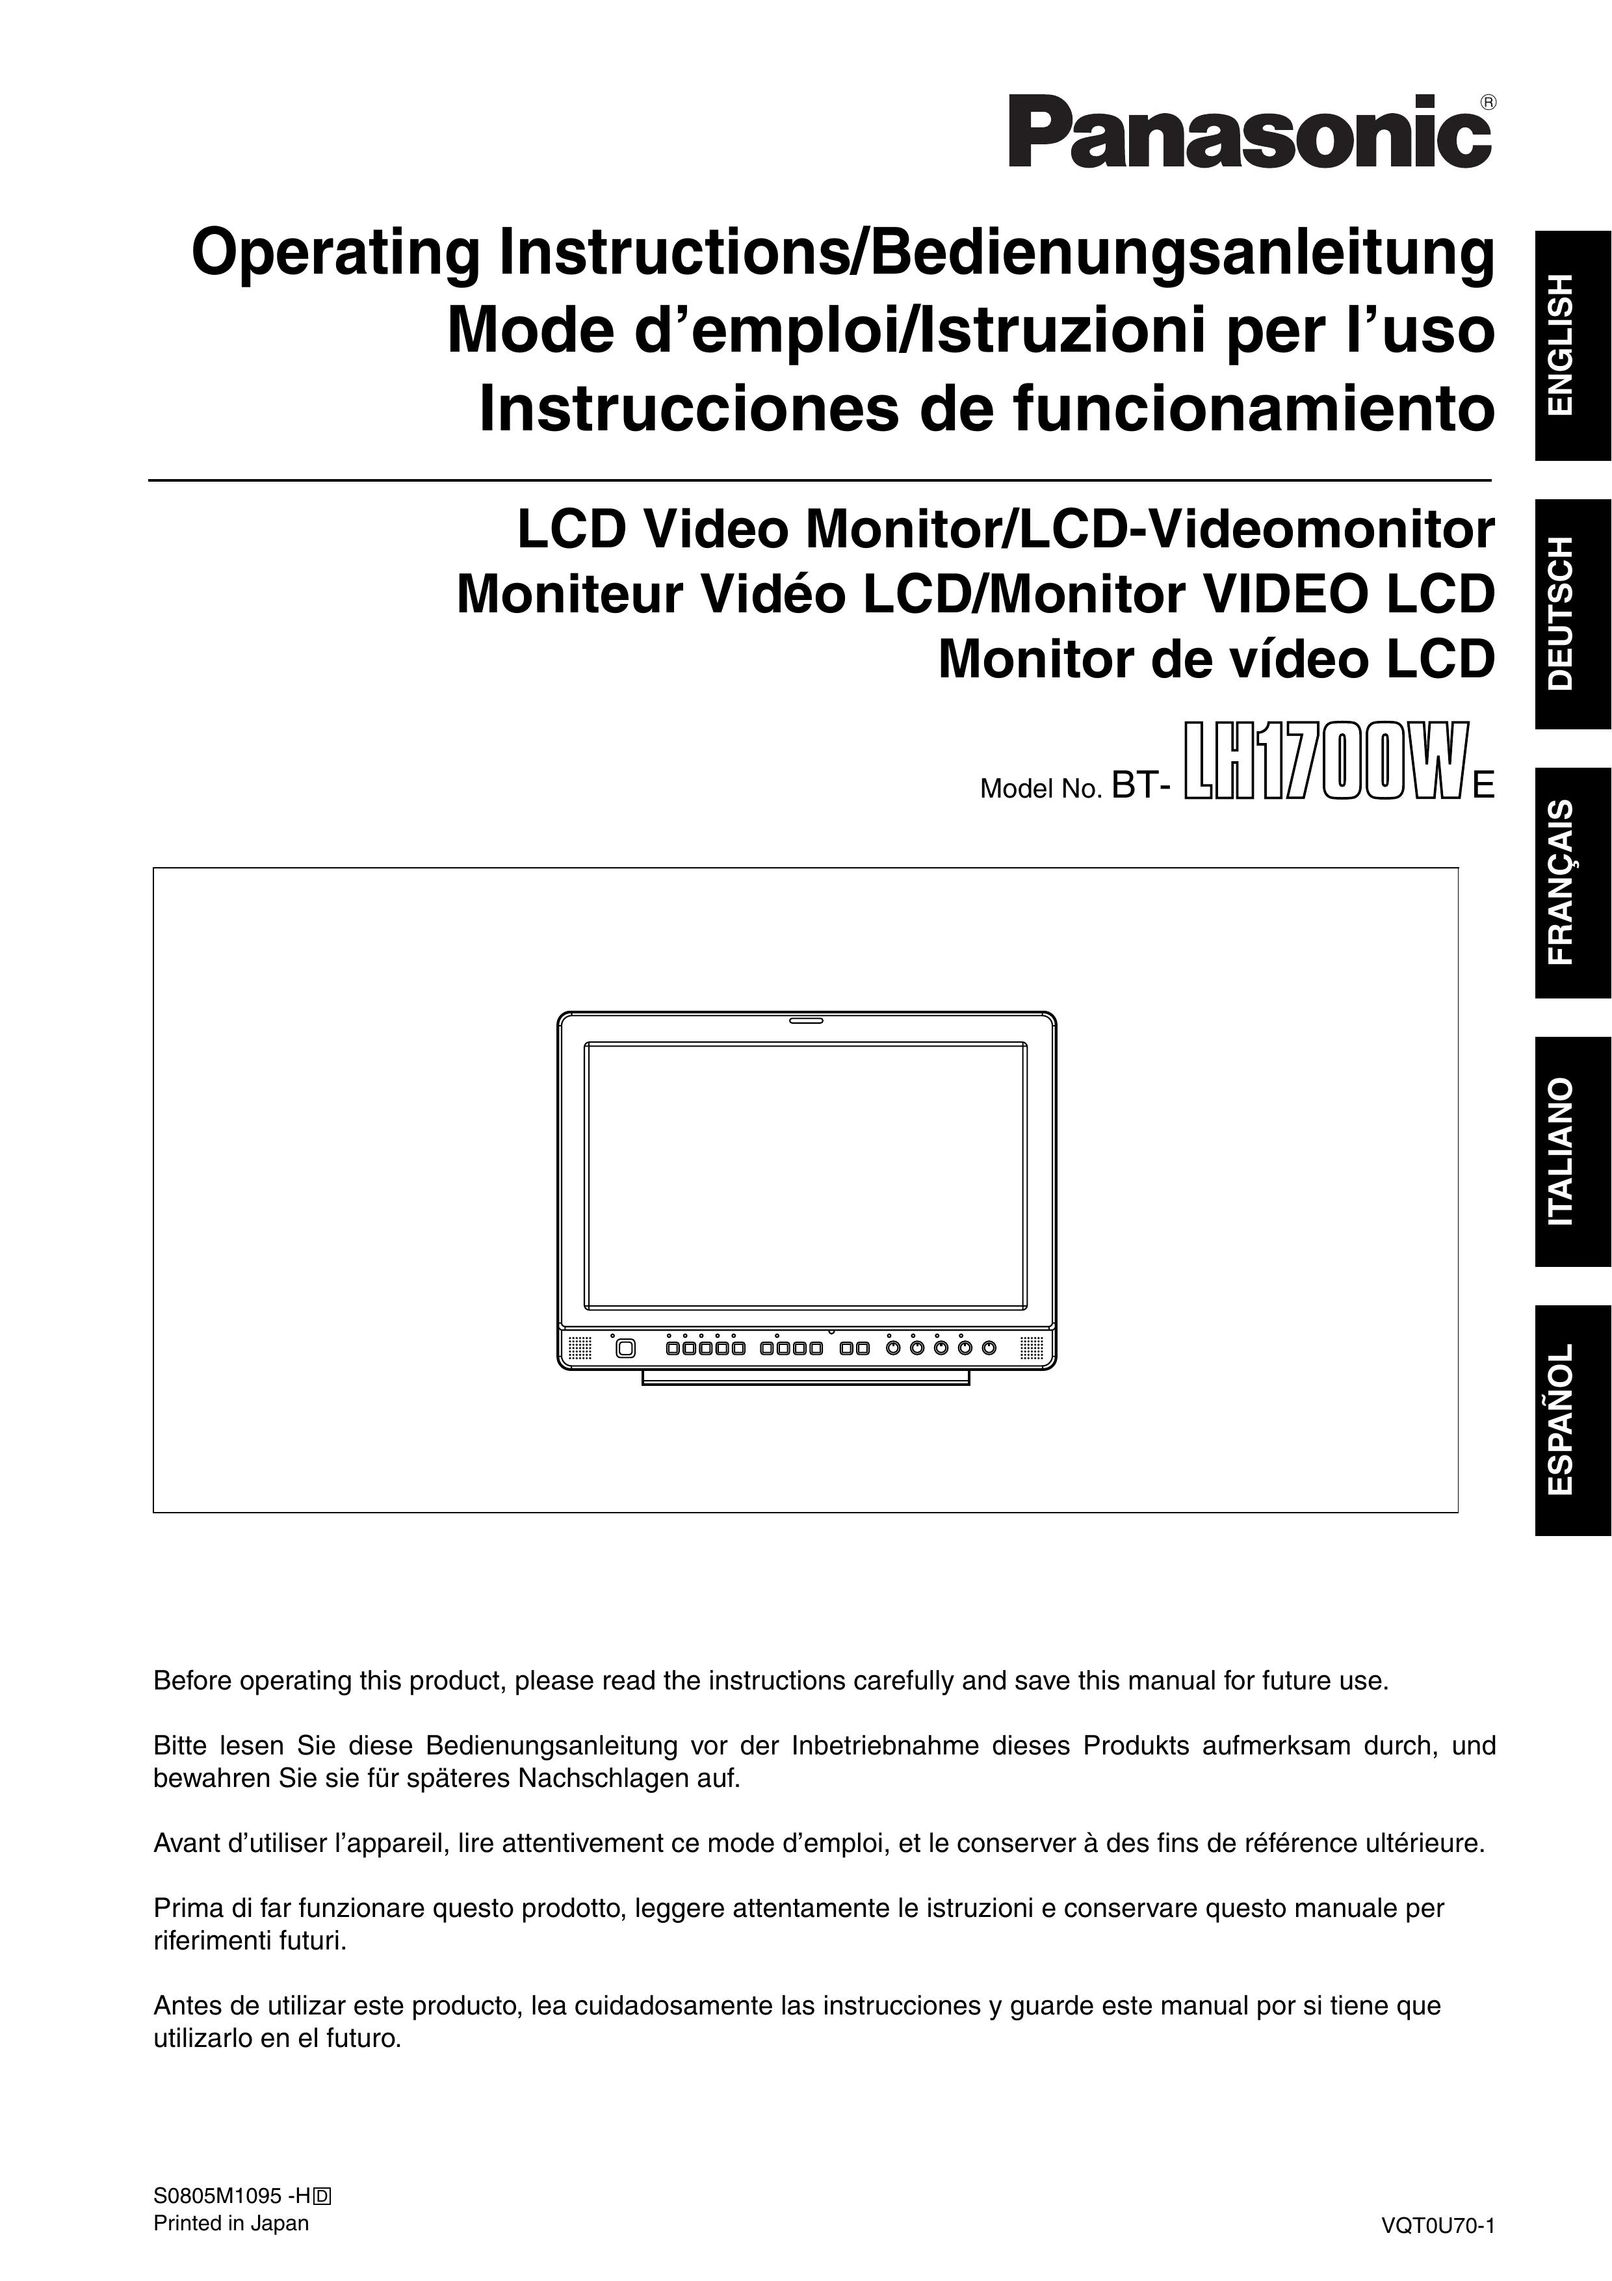 Panasonic BT-LH1700WE Computer Monitor User Manual